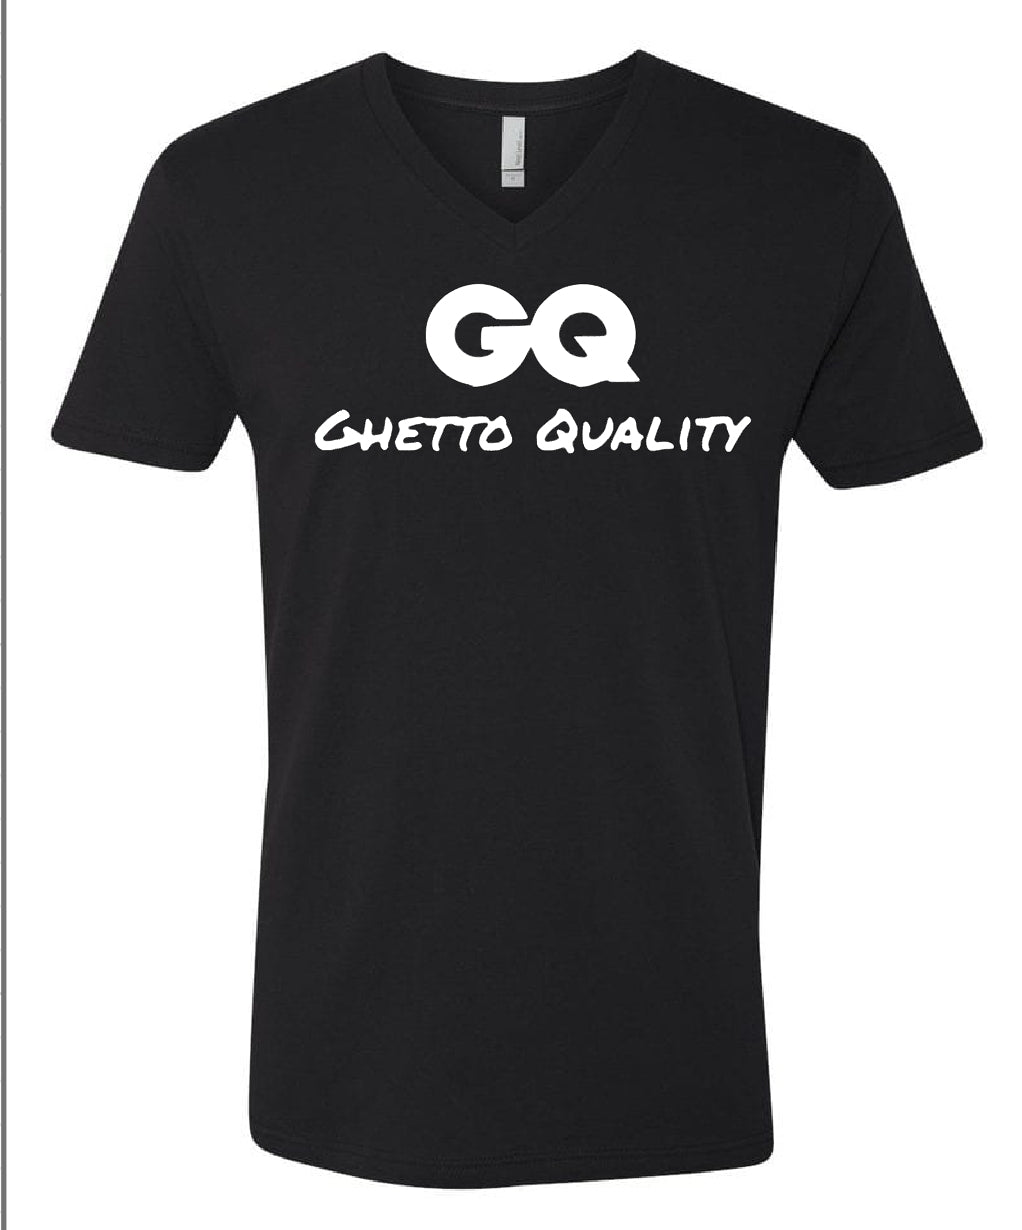 Ghetto Quality T-shirt.